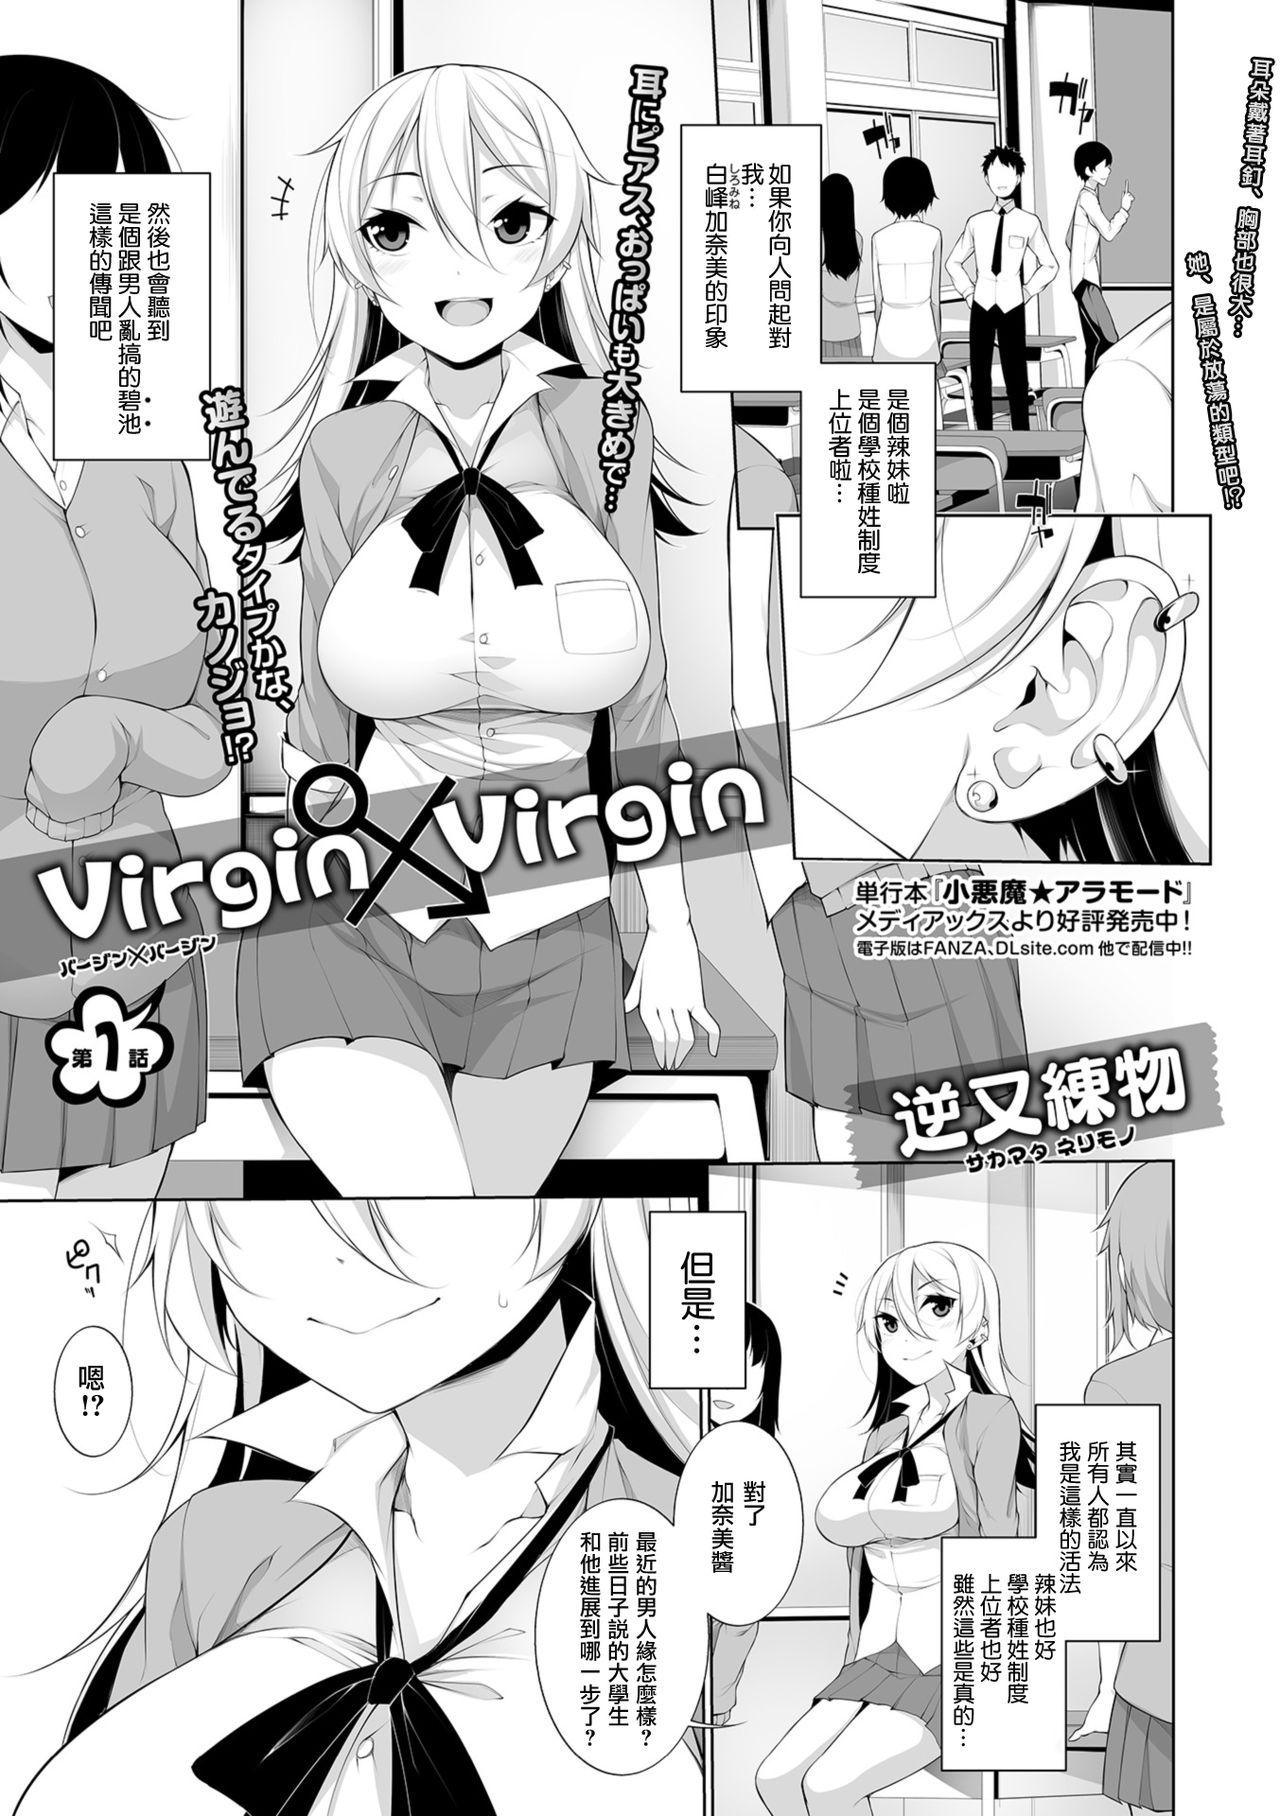 Virgin x Virgin Ch. 1 0